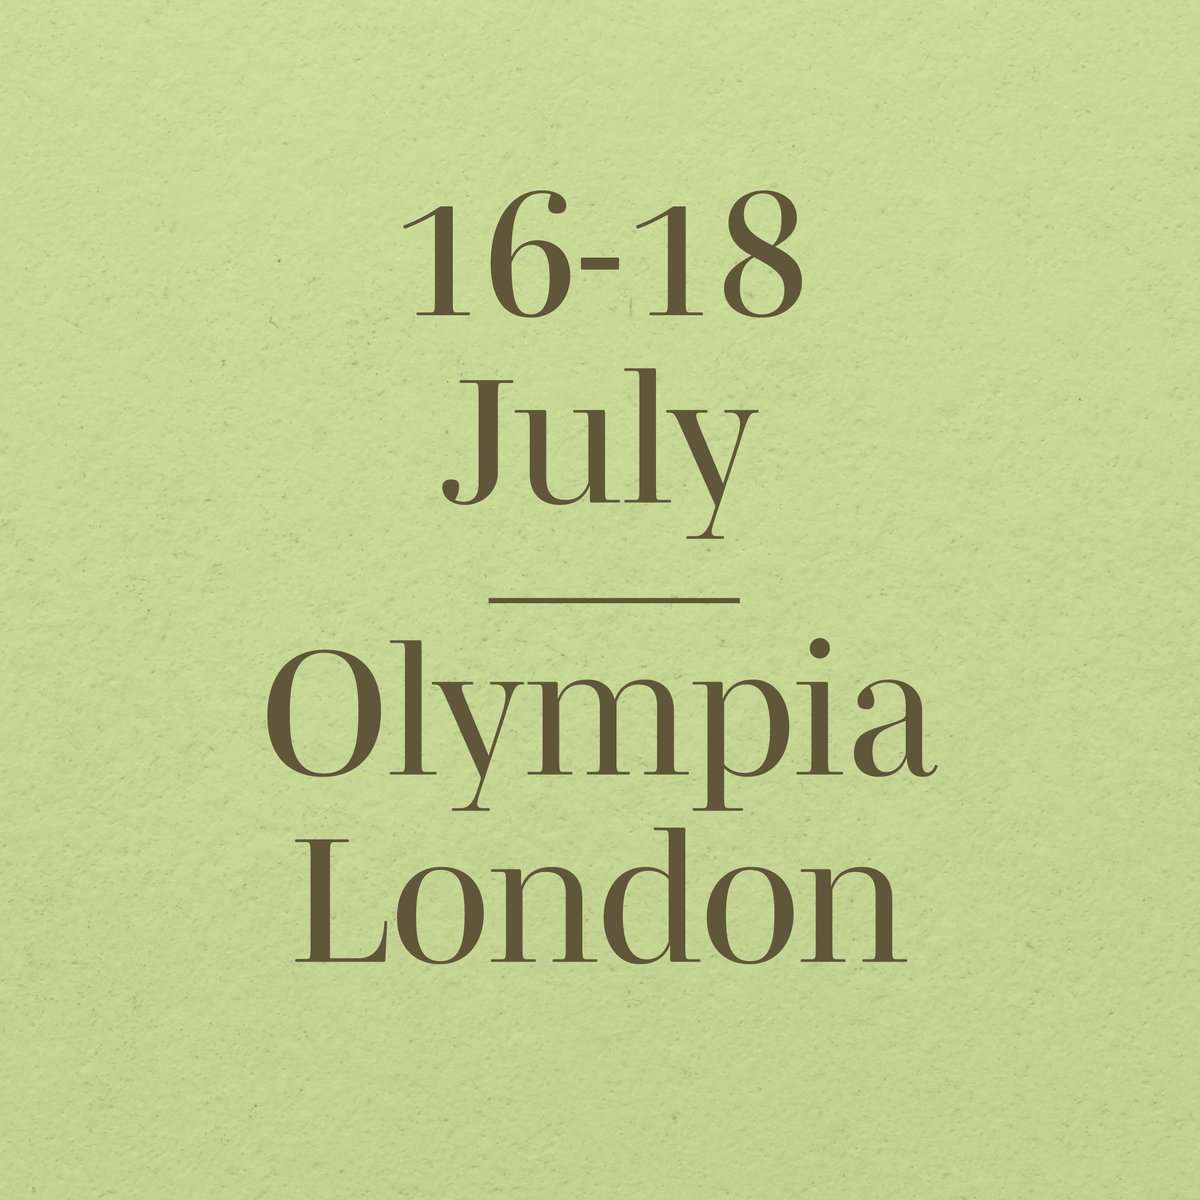 📢Save the date📢
16-18 July, Olympia London. Pure London is back!

#purelondon #purelondonshow #fashiontradeevent #fashionbuying